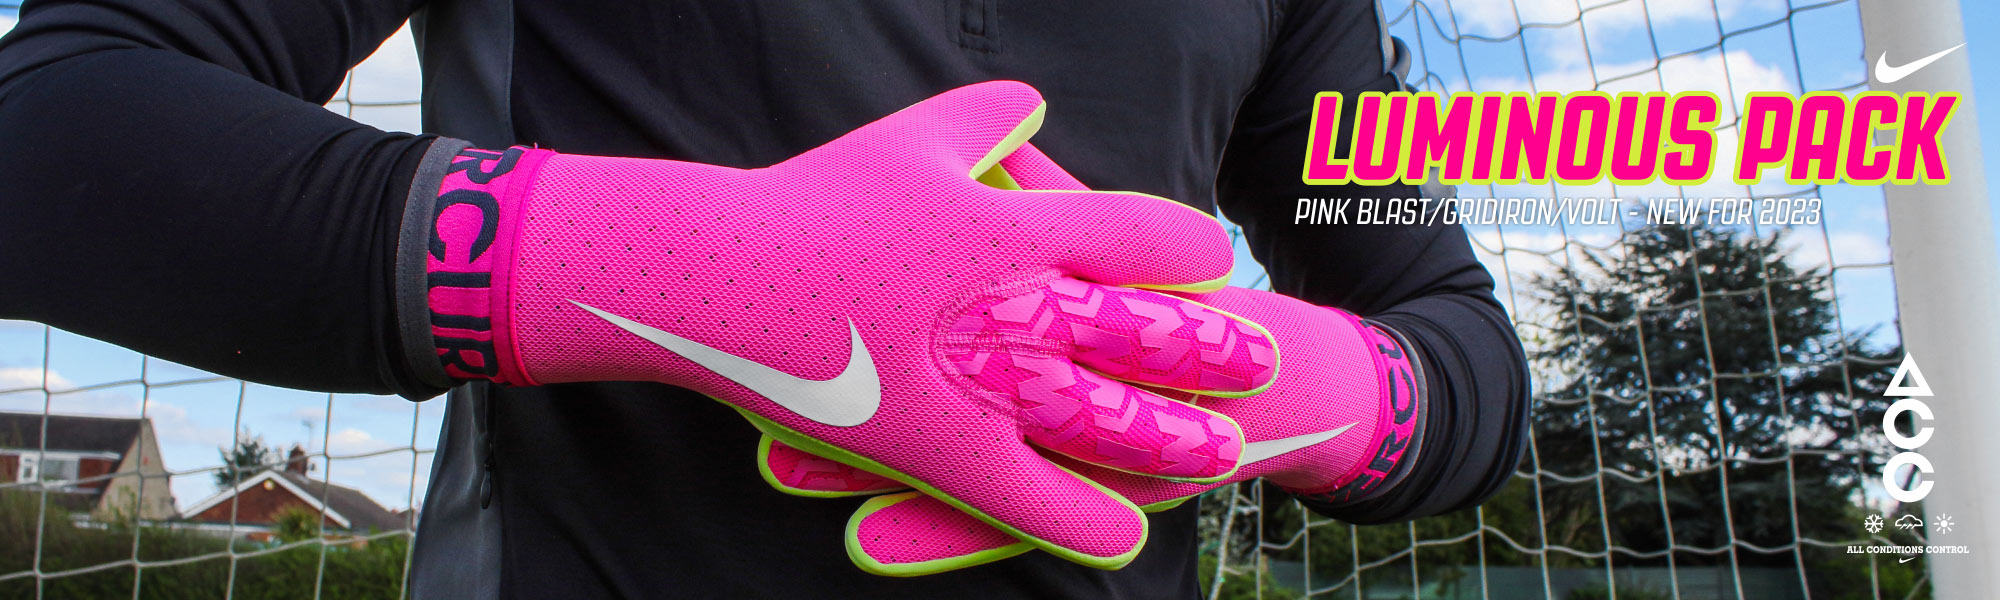 Nike Mercurial Touch Elite Blast Pink Liminous Pack Gloves